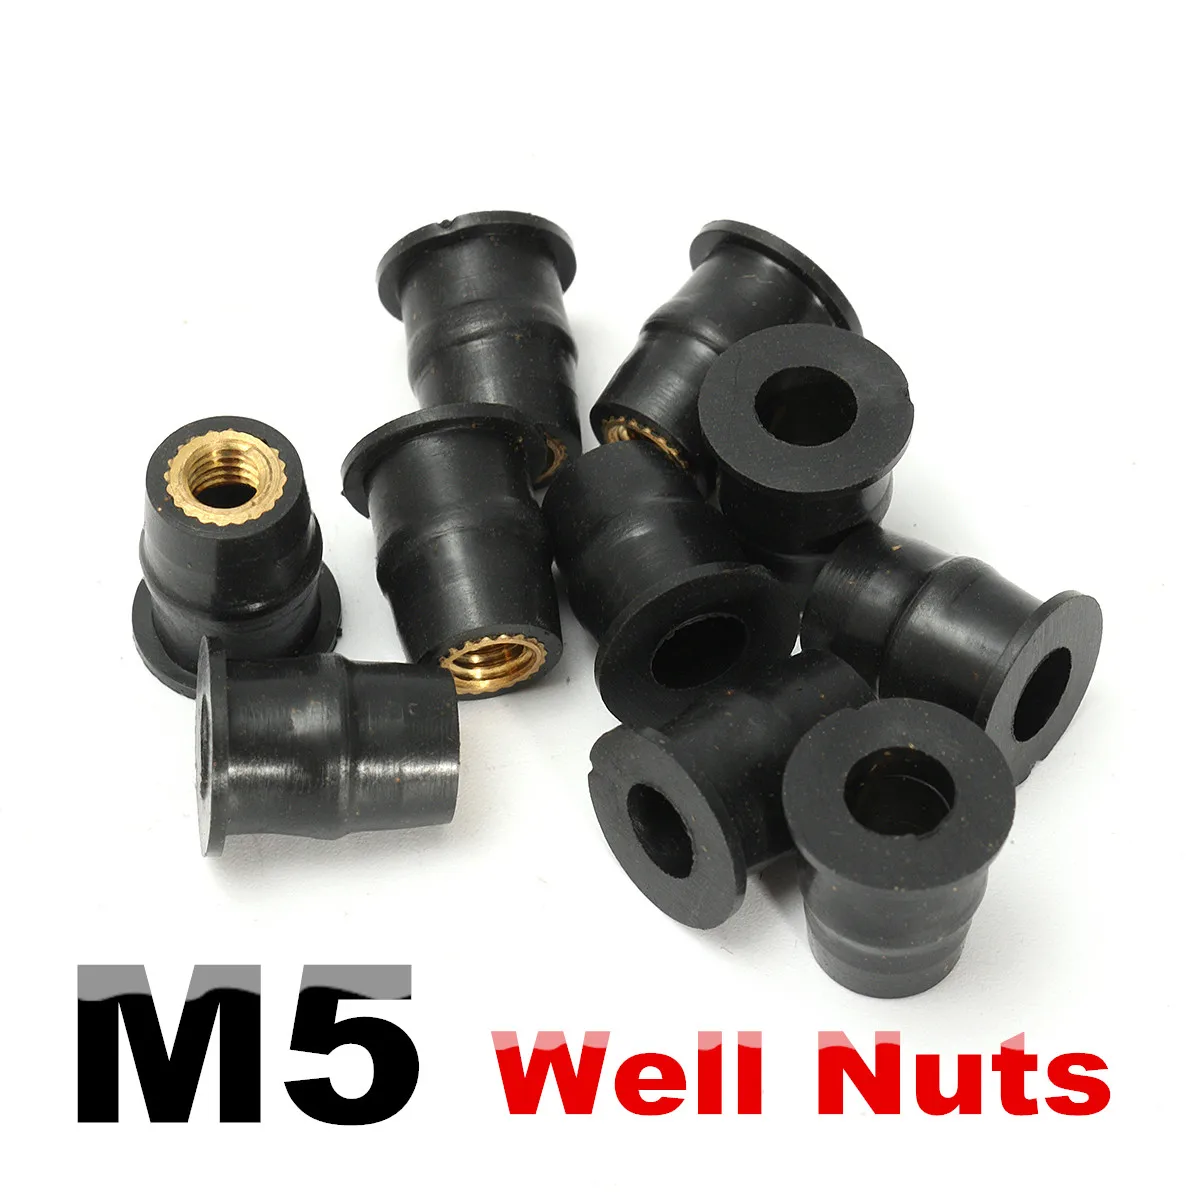 10x M5 L=14mm fit 10mm hole well nuts rawl plugs grommets nut 